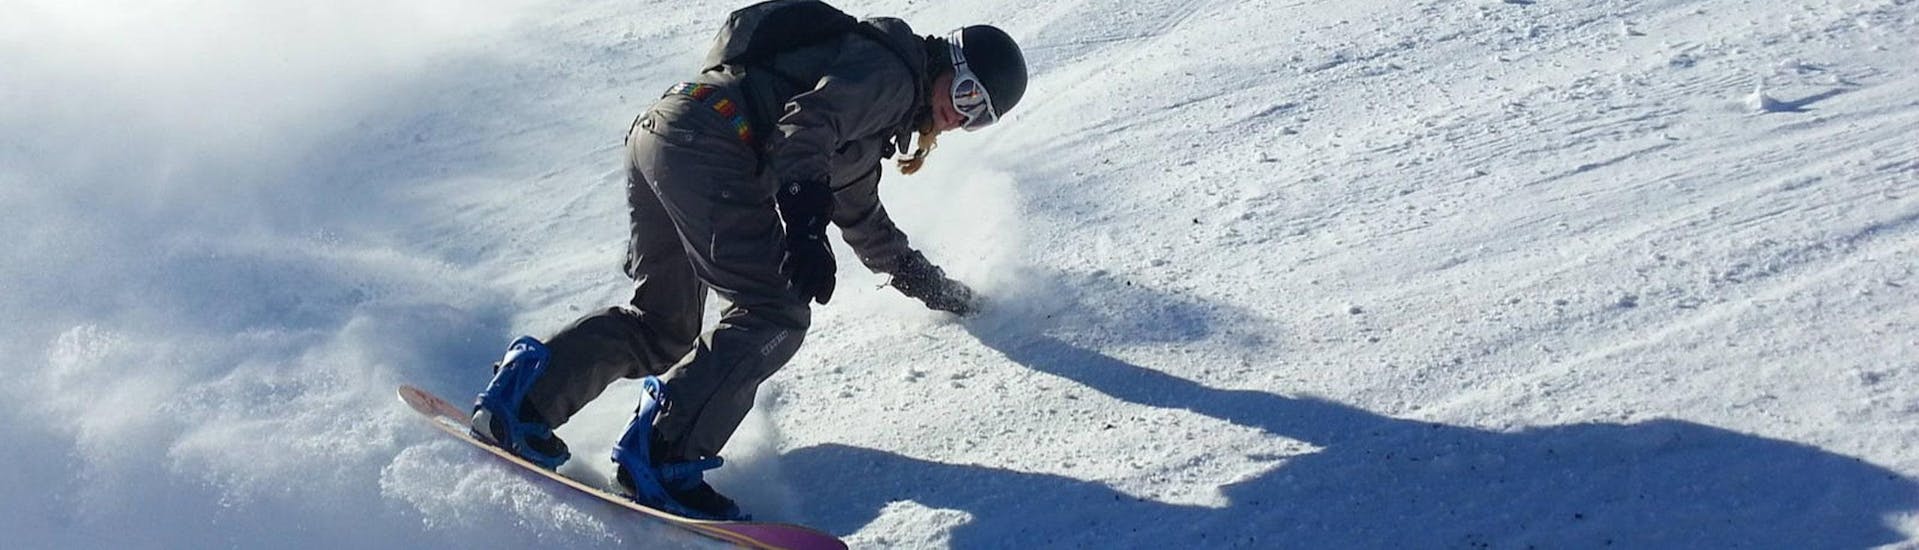 Lezioni di Snowboard a partire da 8 anni per tutti i livelli.